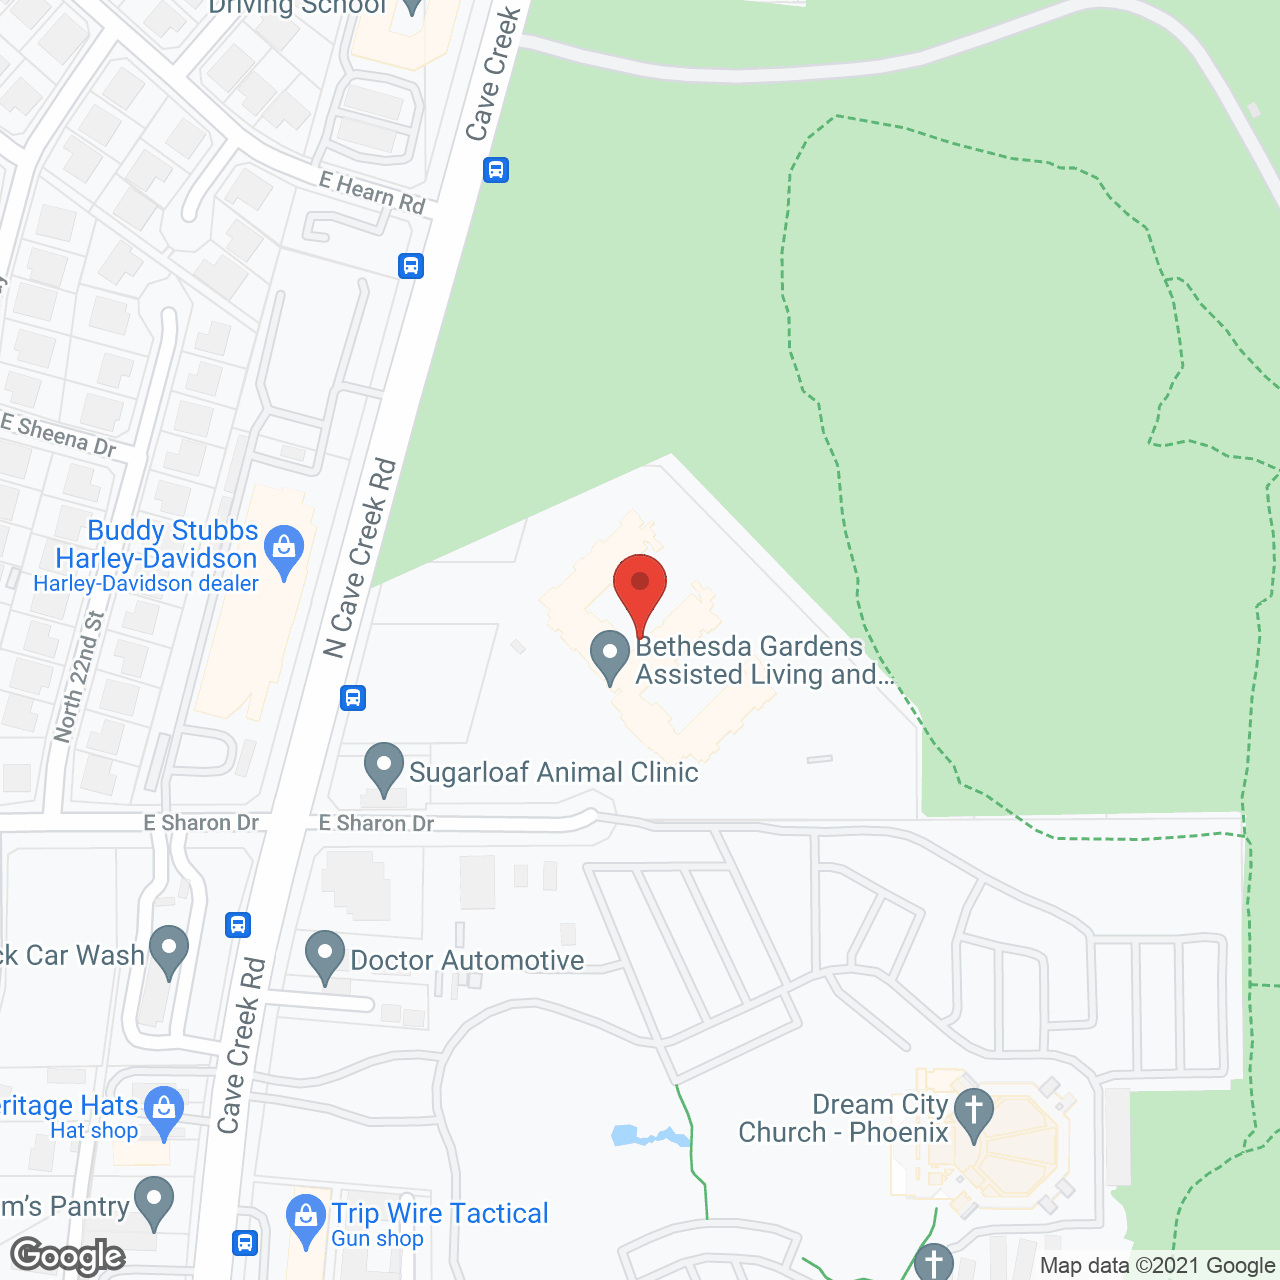 Bethesda Gardens in google map